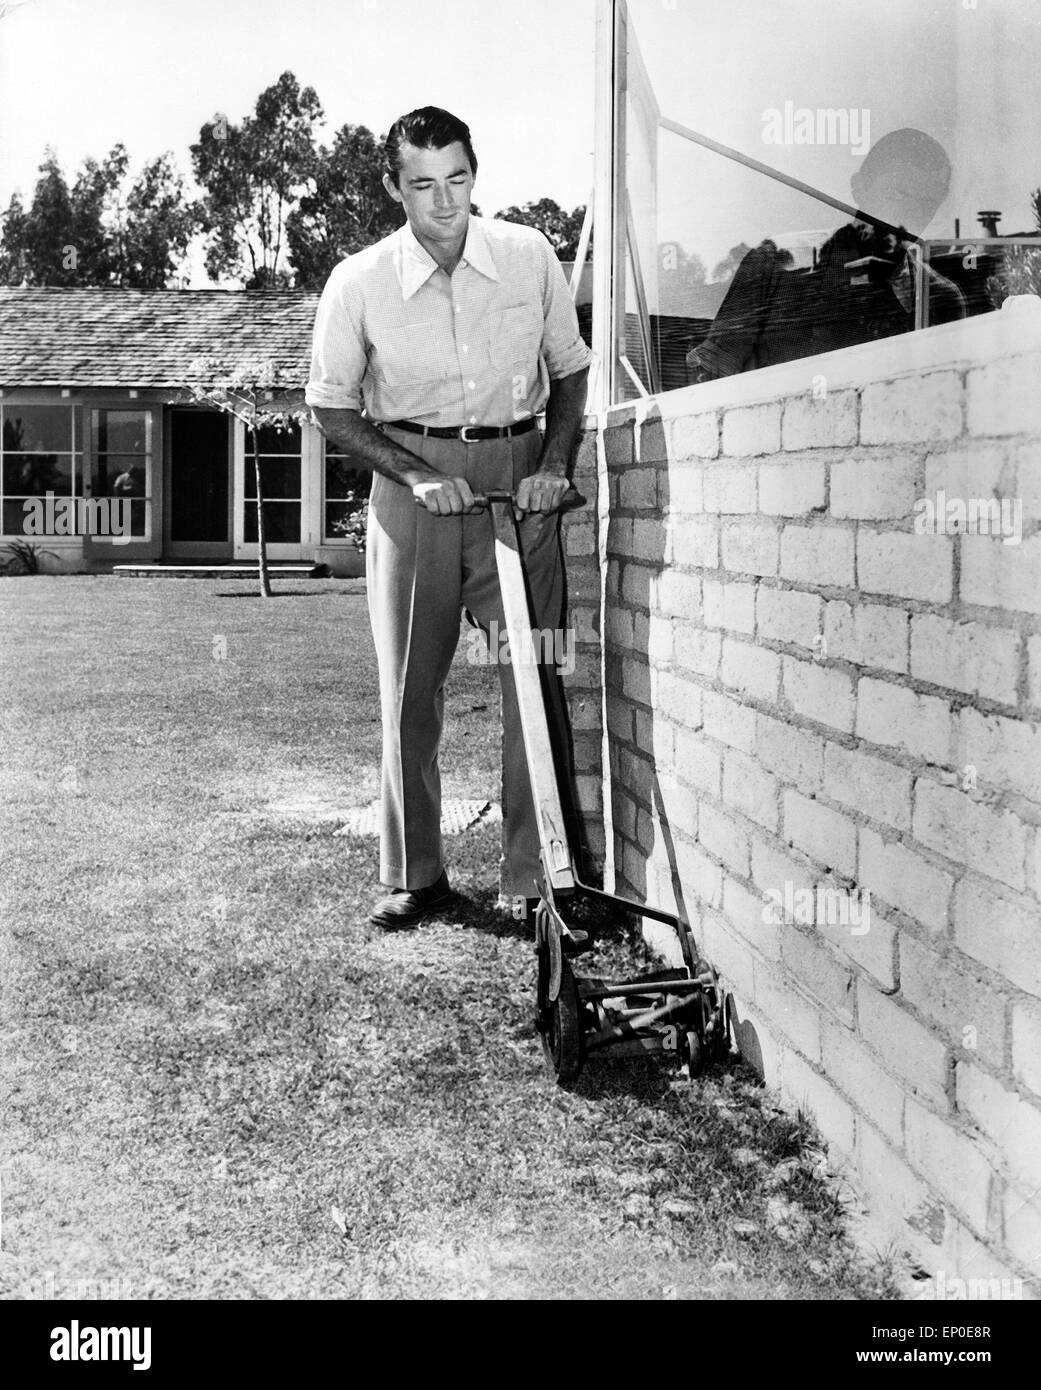 Der amerikanische Schauspieler Gregory Peck beim Rasenmähen, 1950er Jahre. American actor Gregory Peck mowing a meadow, 1950s. Stock Photo